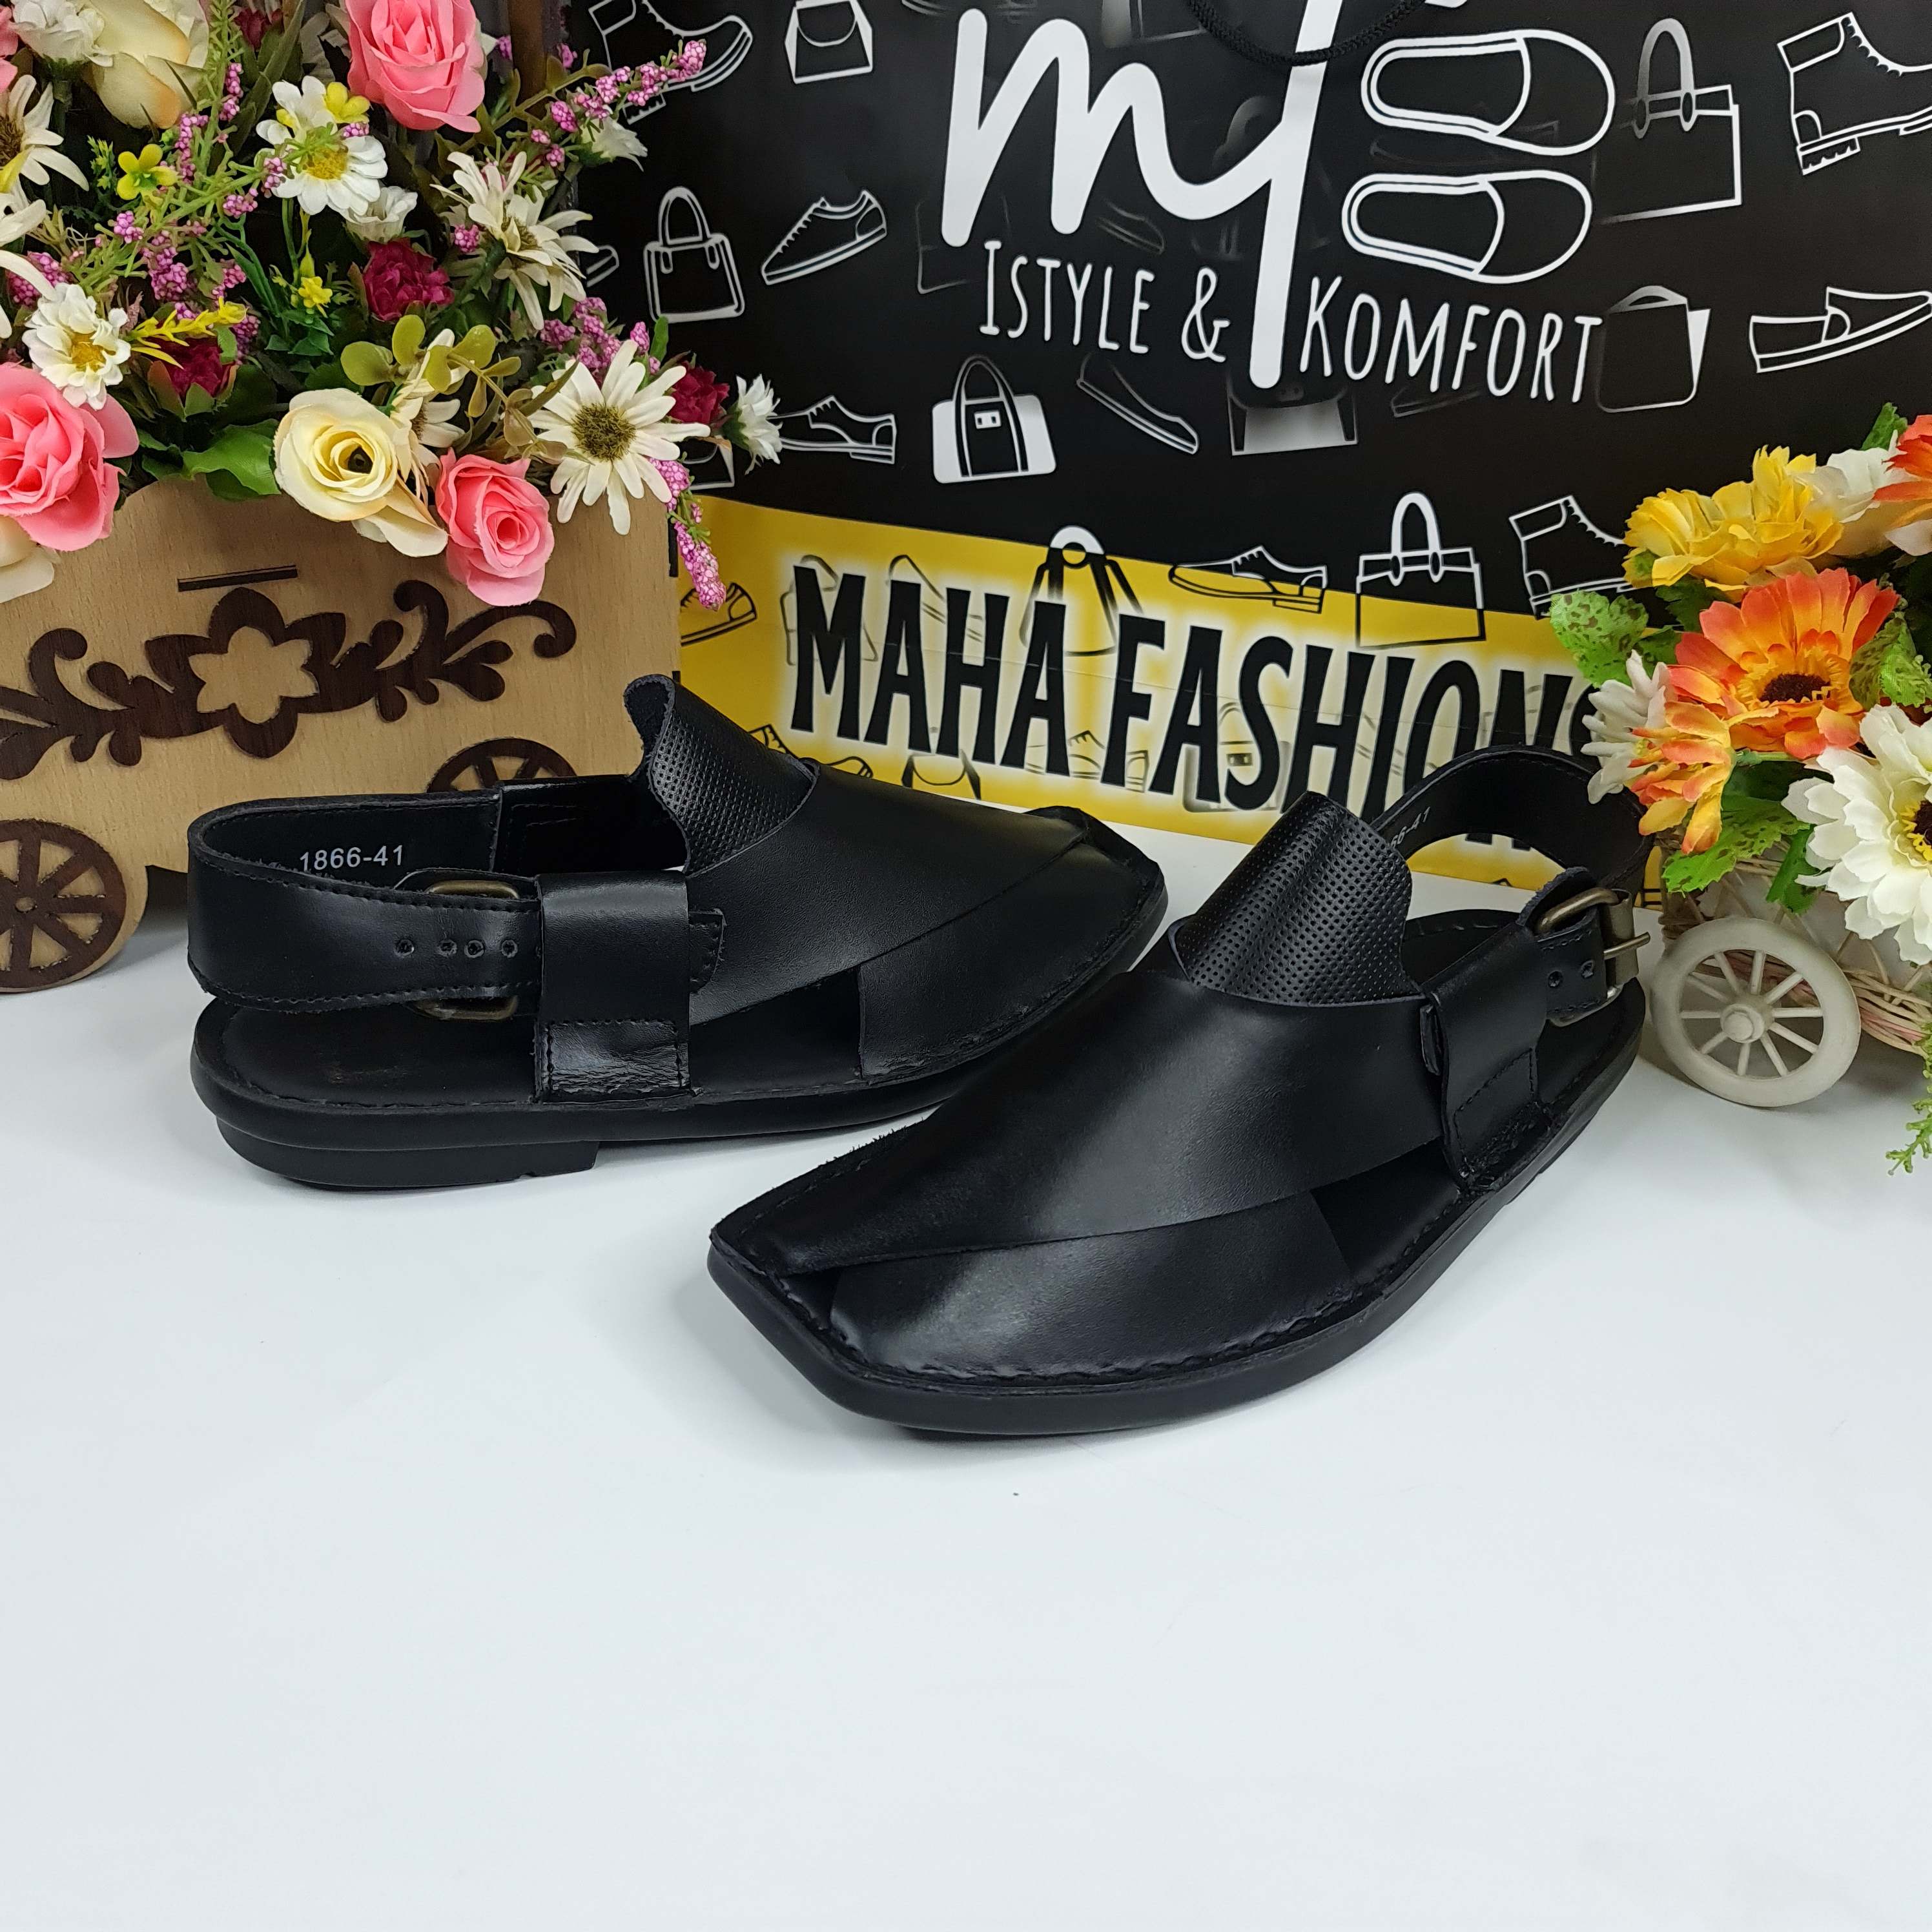 Black Casual Peshawri Sandals - Maha fashions -  